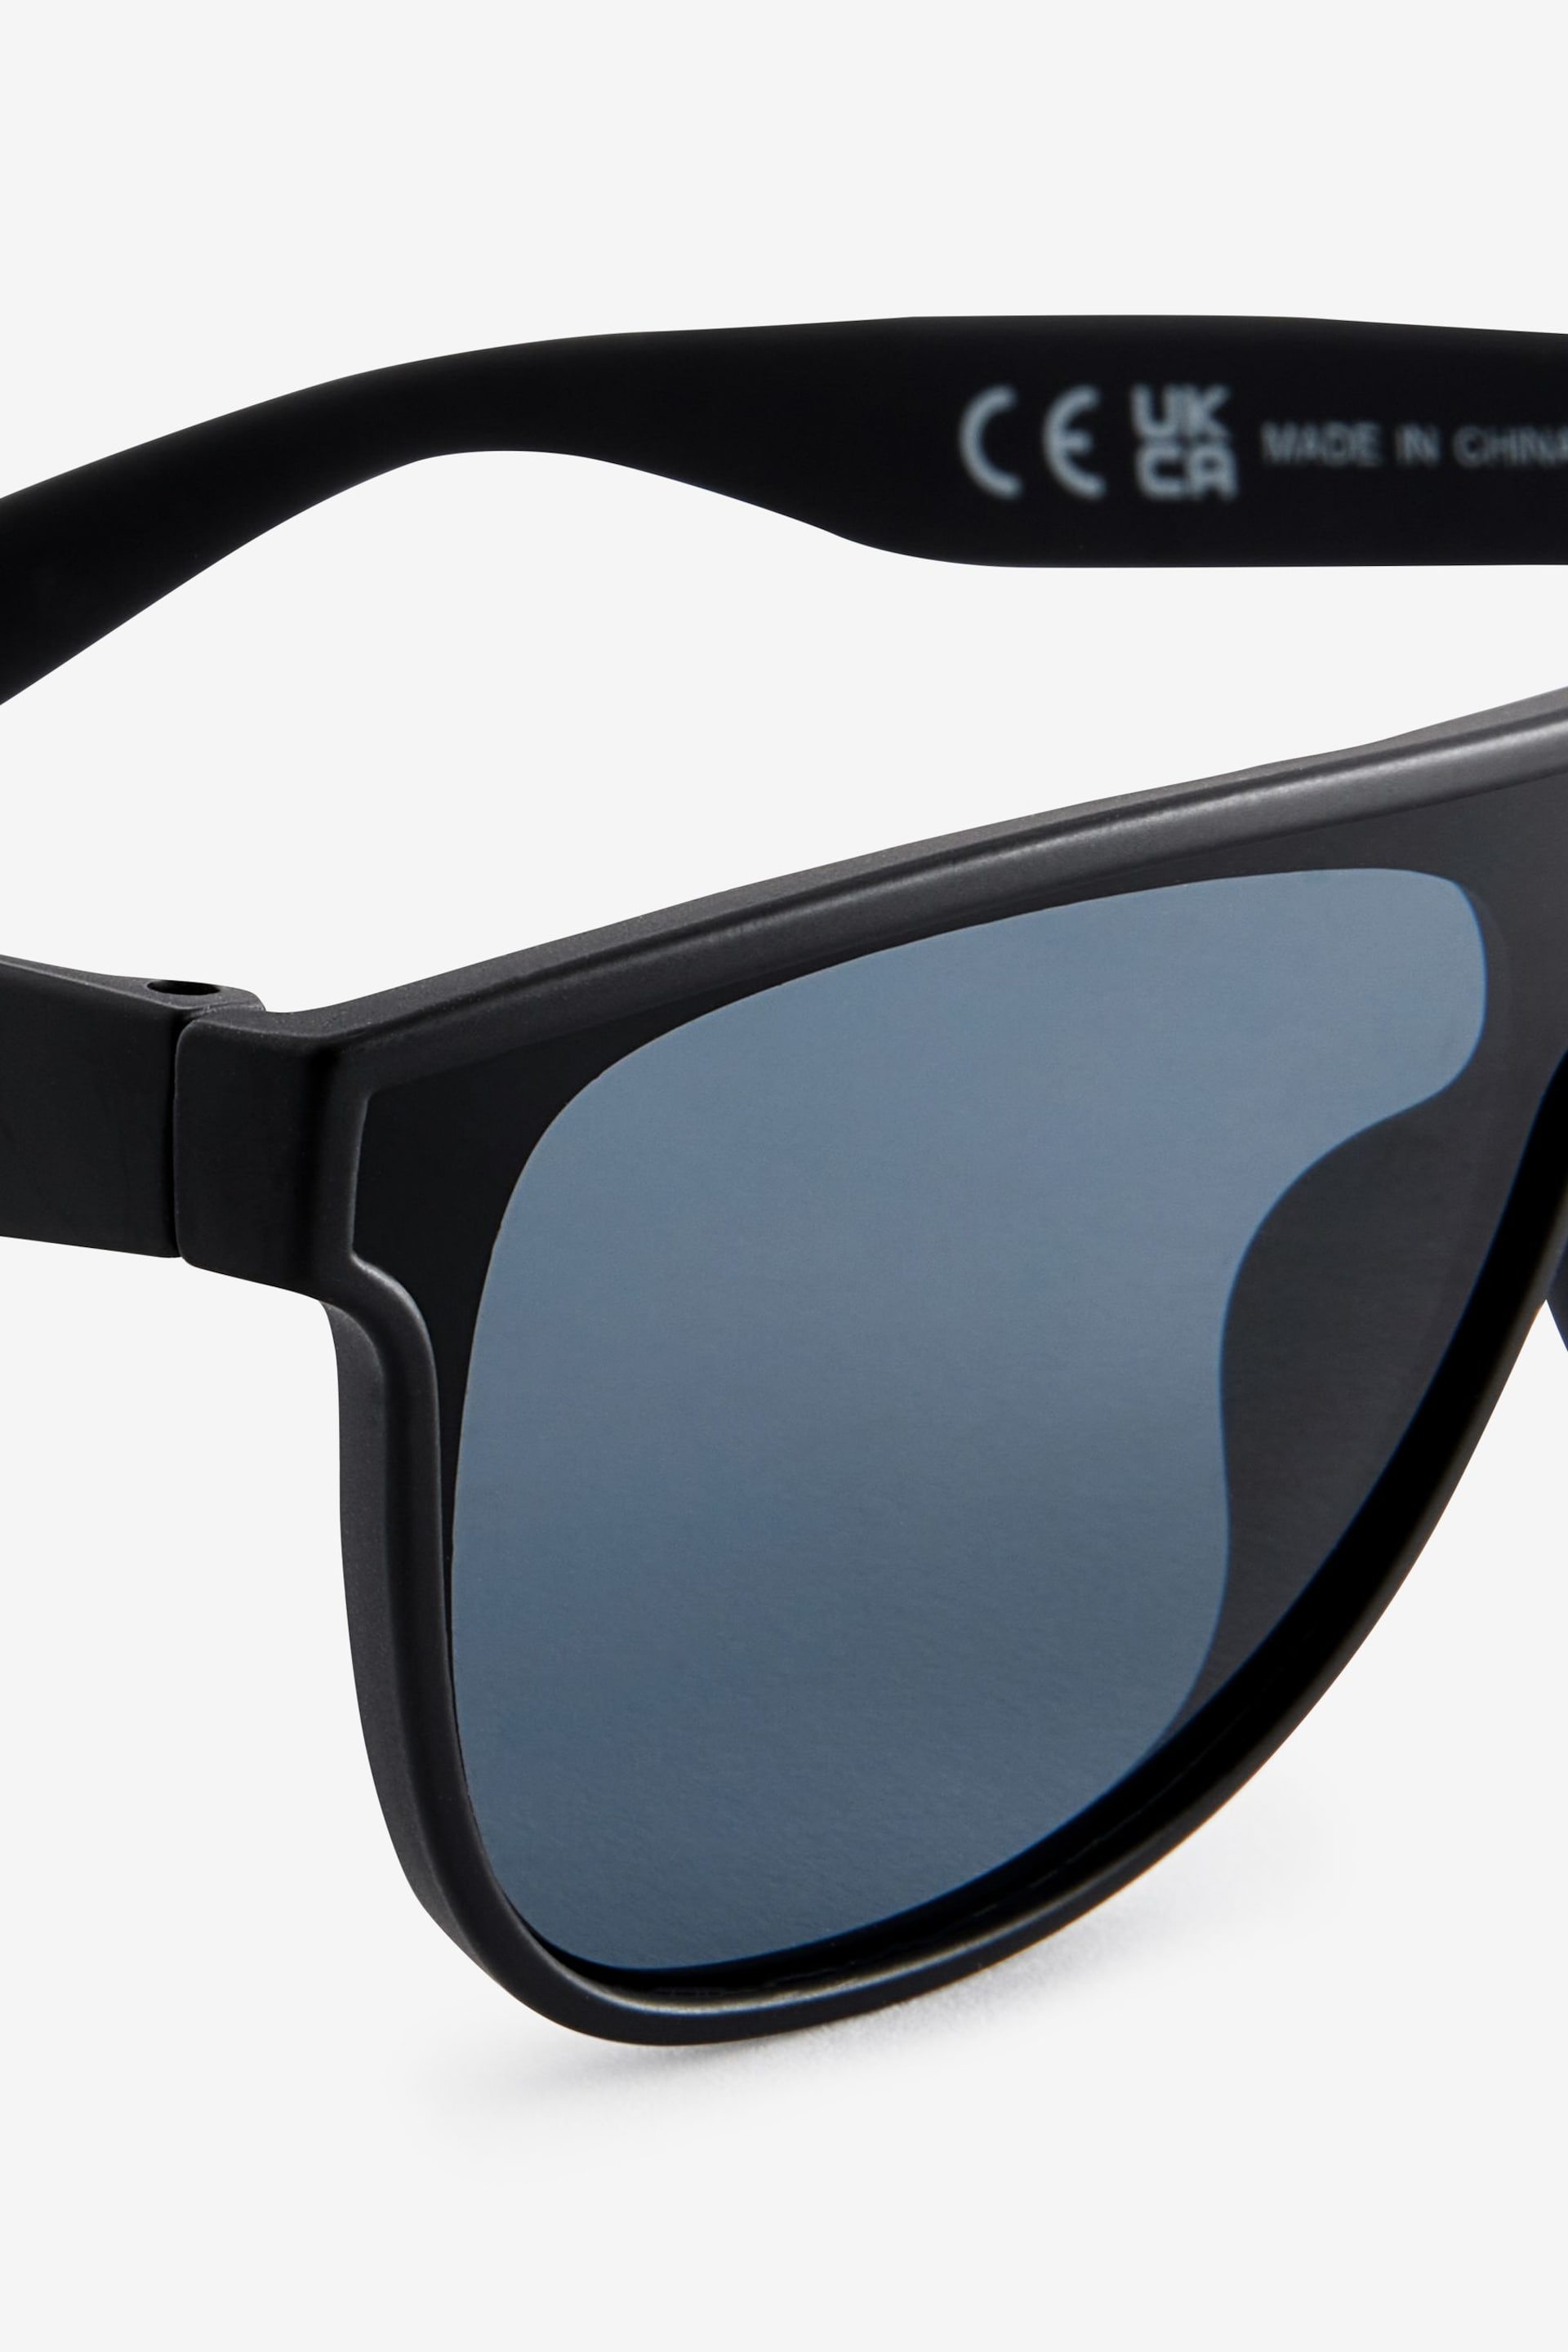 Black Visor Style Sunglasses - Image 3 of 3